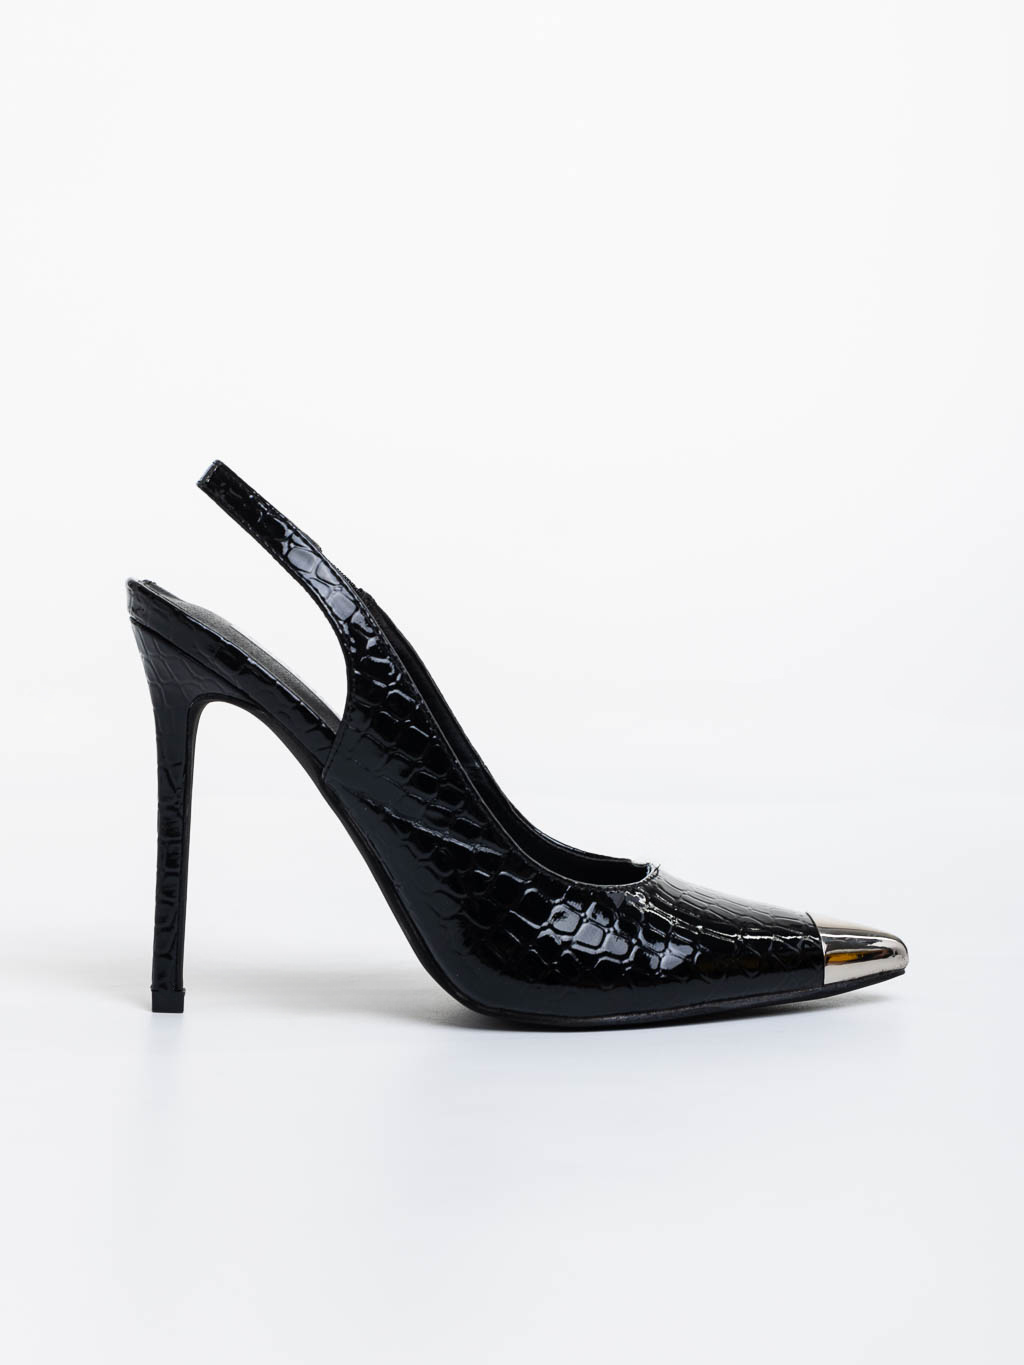 Pantofi dama negri cu toc din piele eclogica lacuita Sheyla, 5 - Kalapod.net